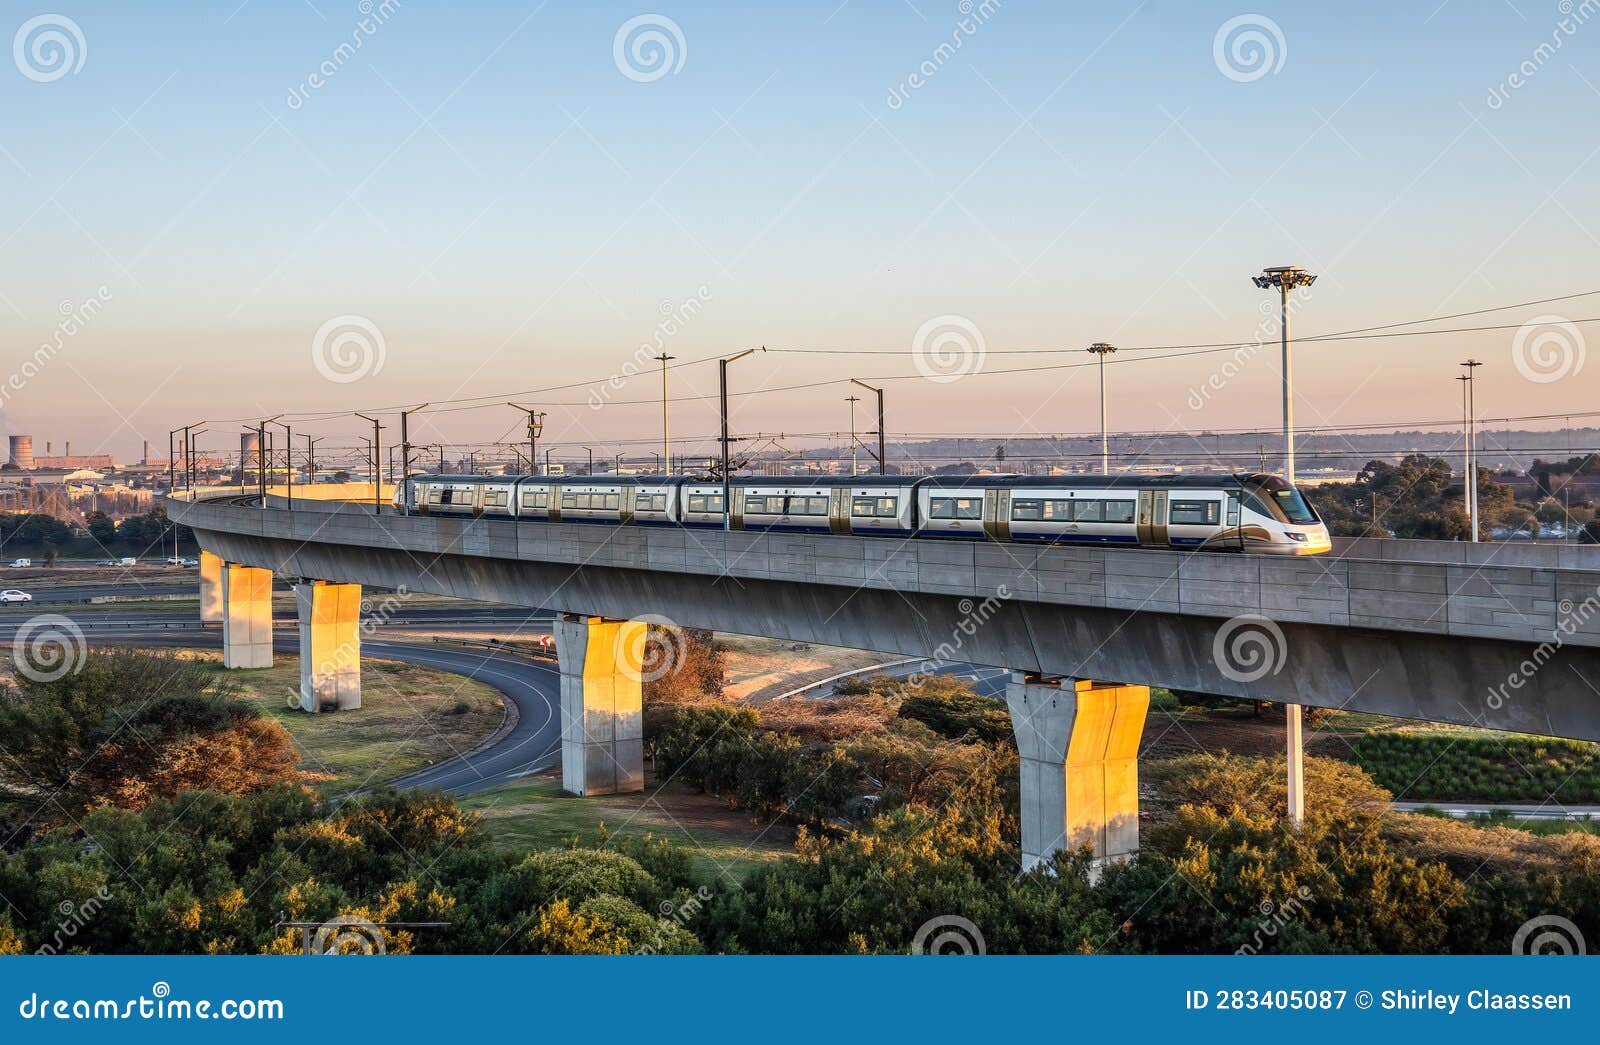 high speed train on a raised railway track